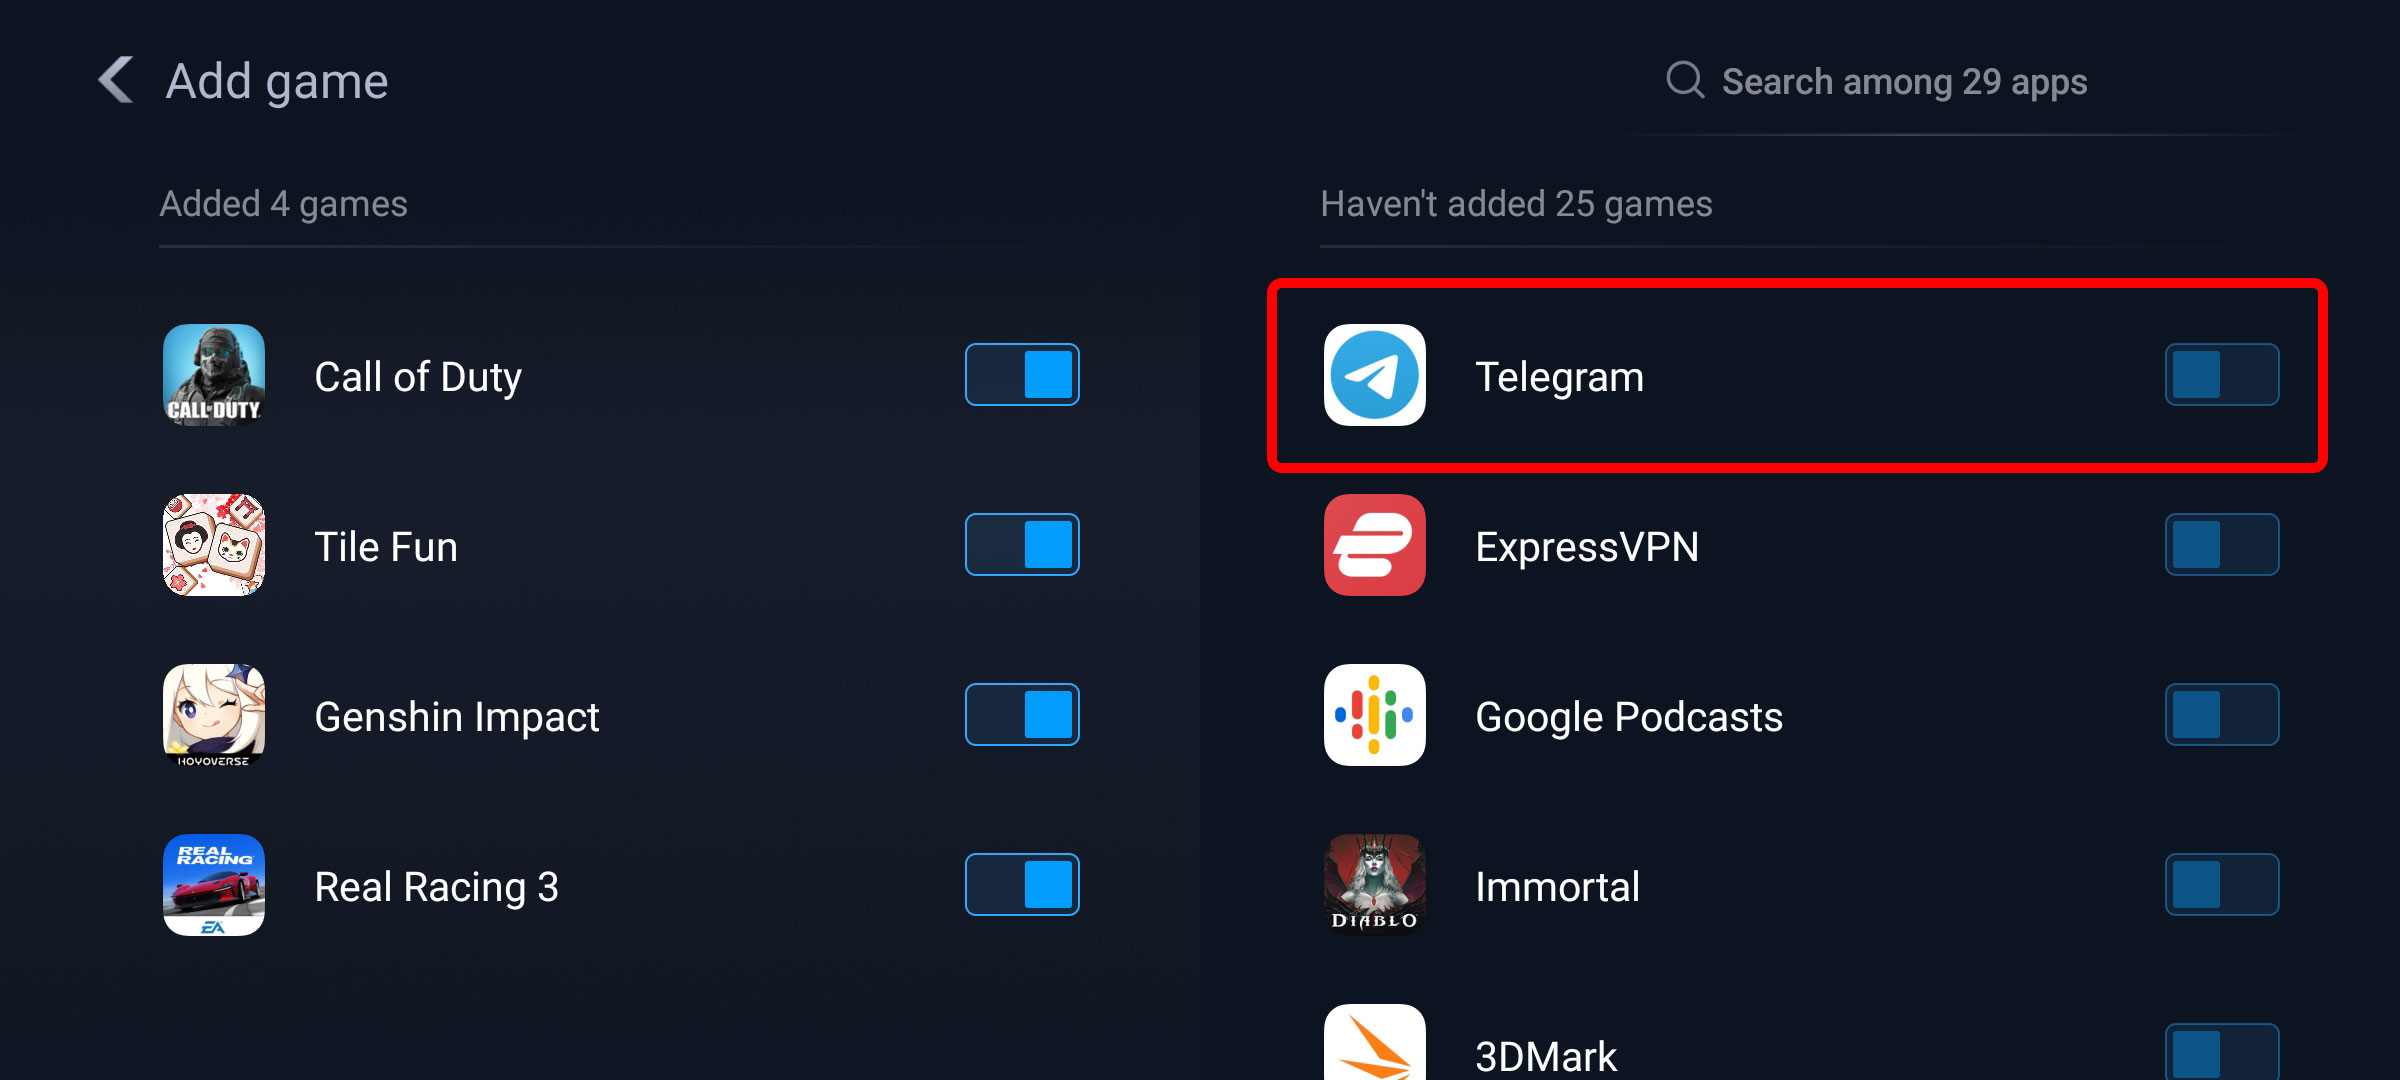 Add Telegram to Turbo game menu